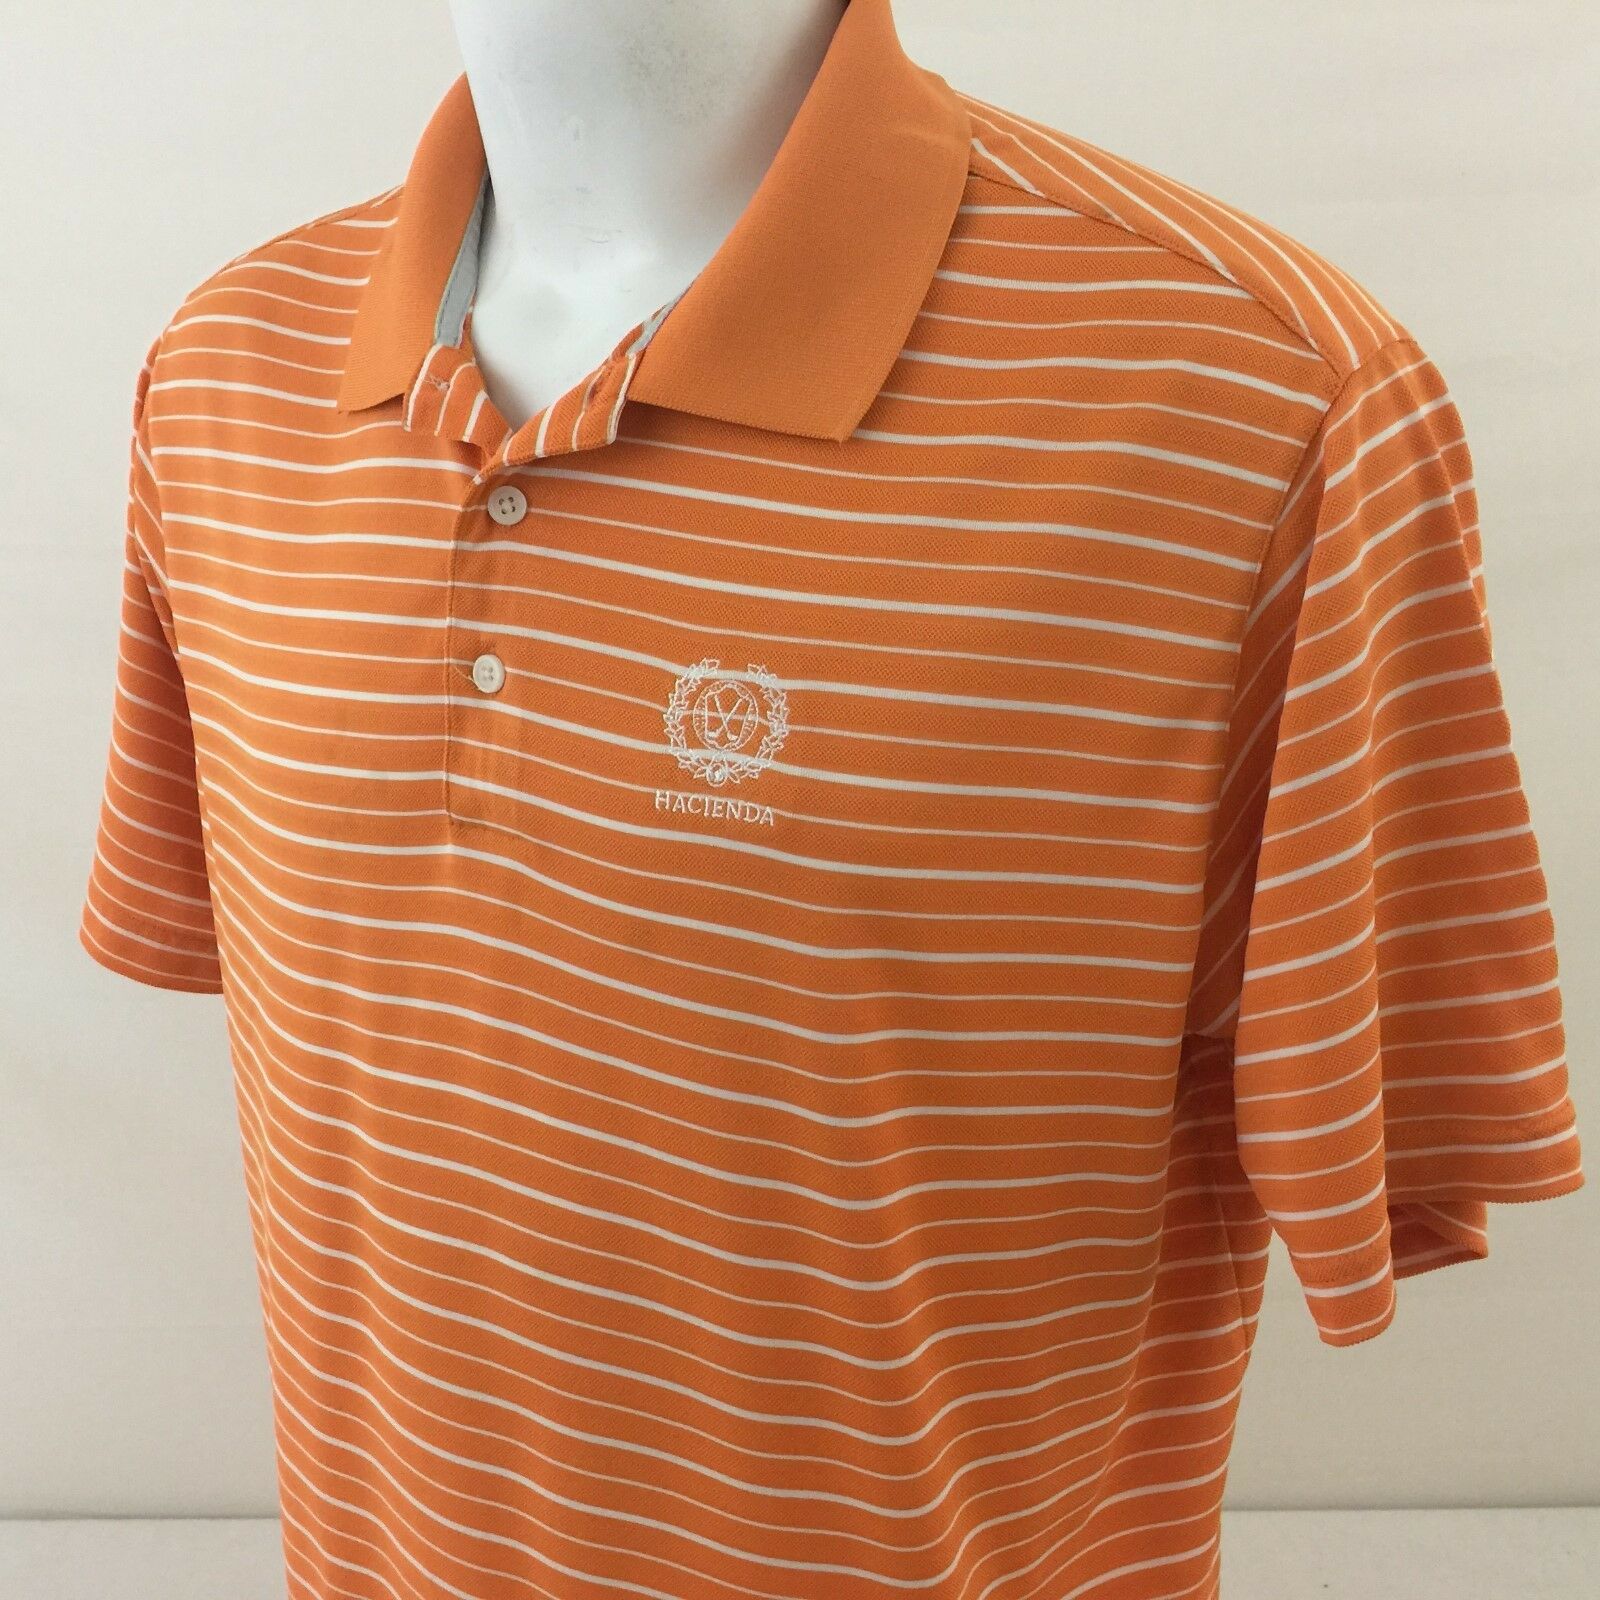 Hacienda Country Club Men's Golf Polo Shirt Large Adidas Climalite Orange Stripe